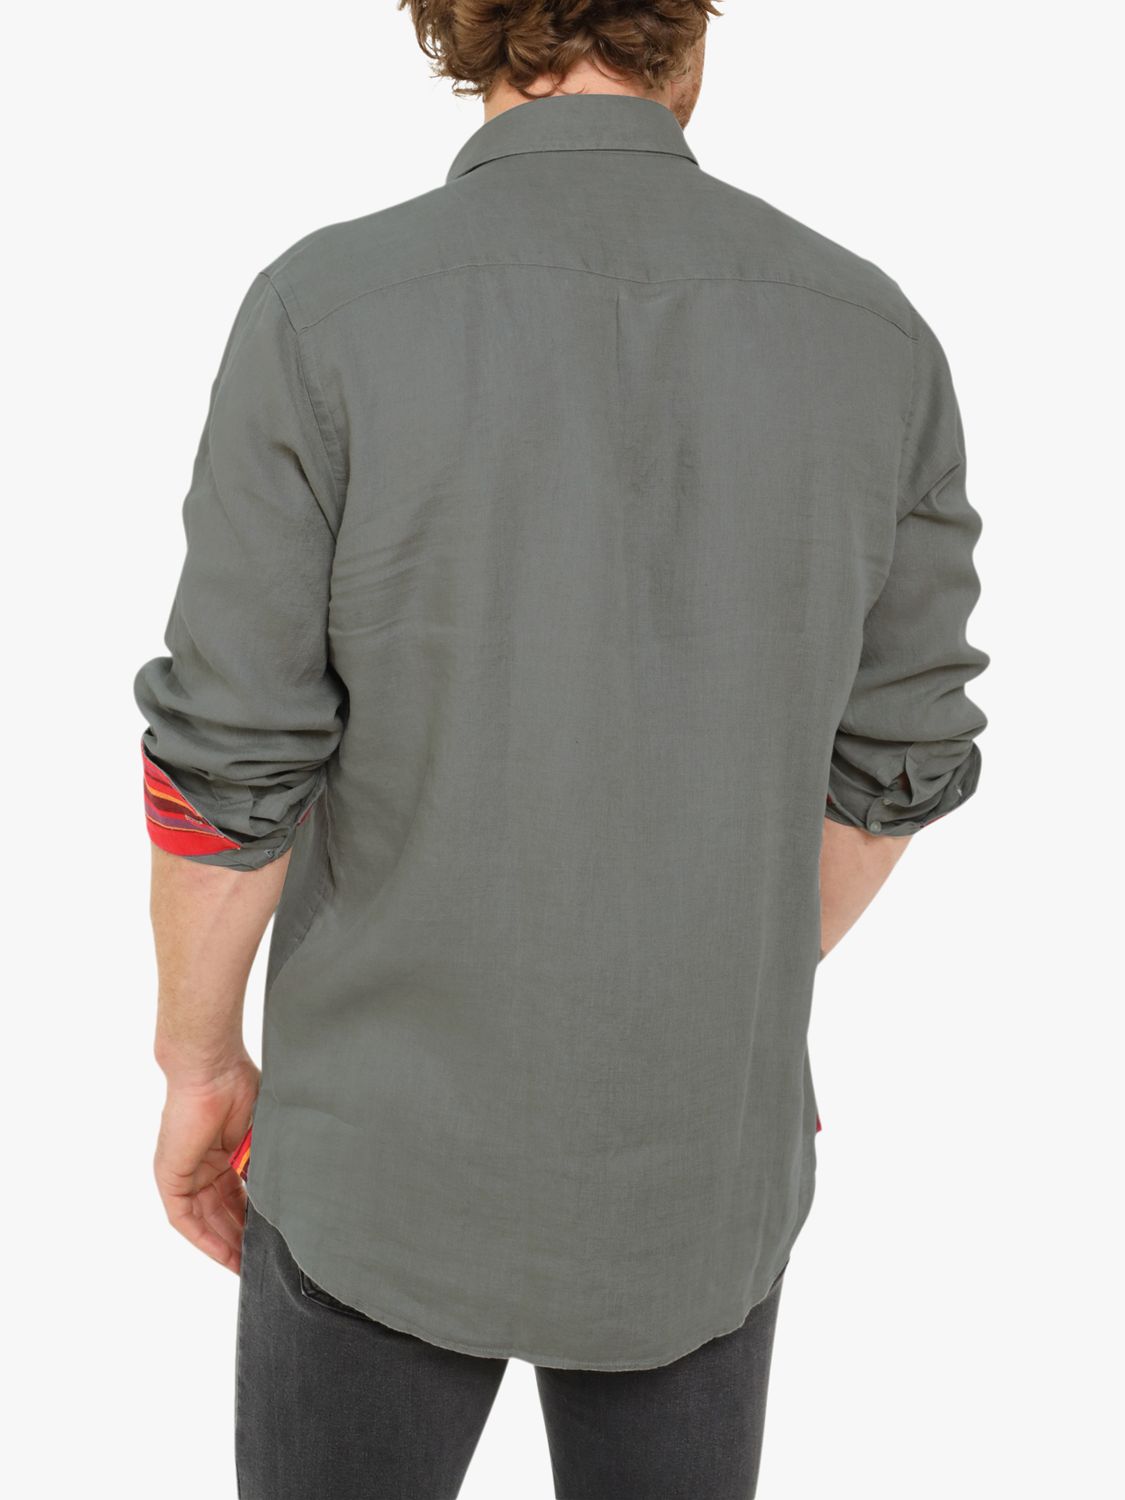 Buy KOY Linen Shirt, Khaki/Olive Online at johnlewis.com